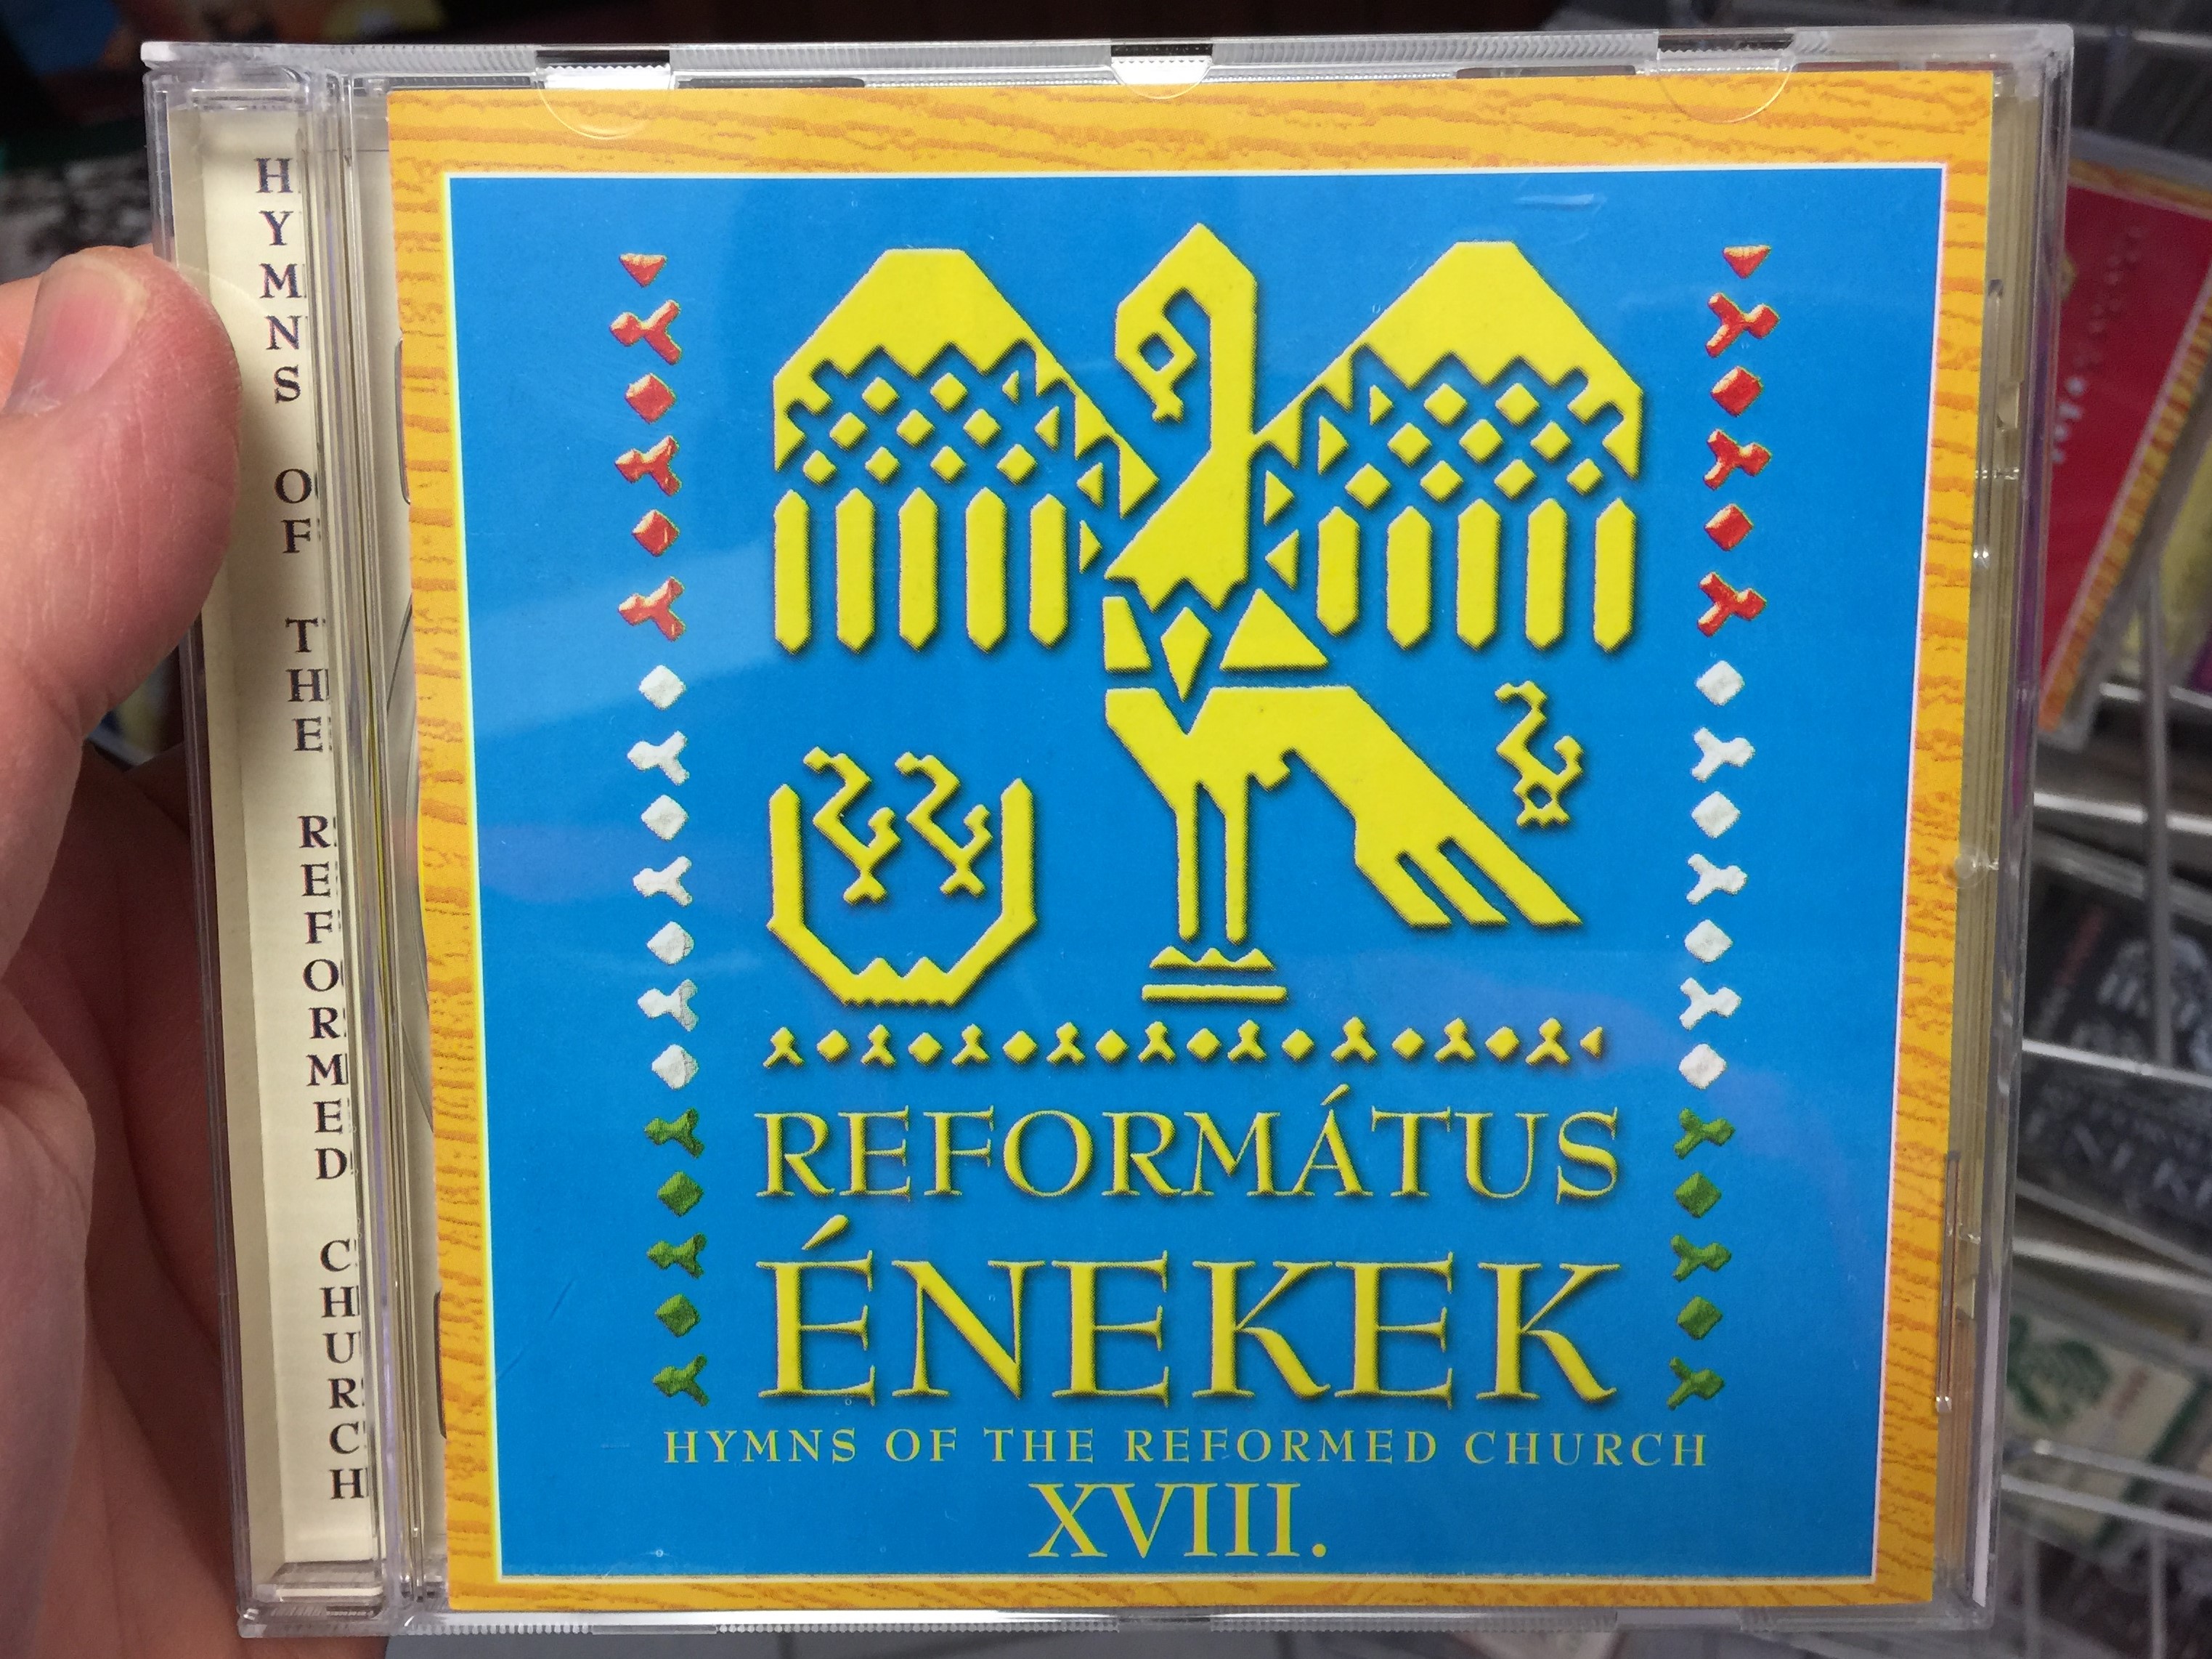 reform-tus-nekek-18.-audio-cd-2019-hymns-of-the-reformed-church-1.jpg